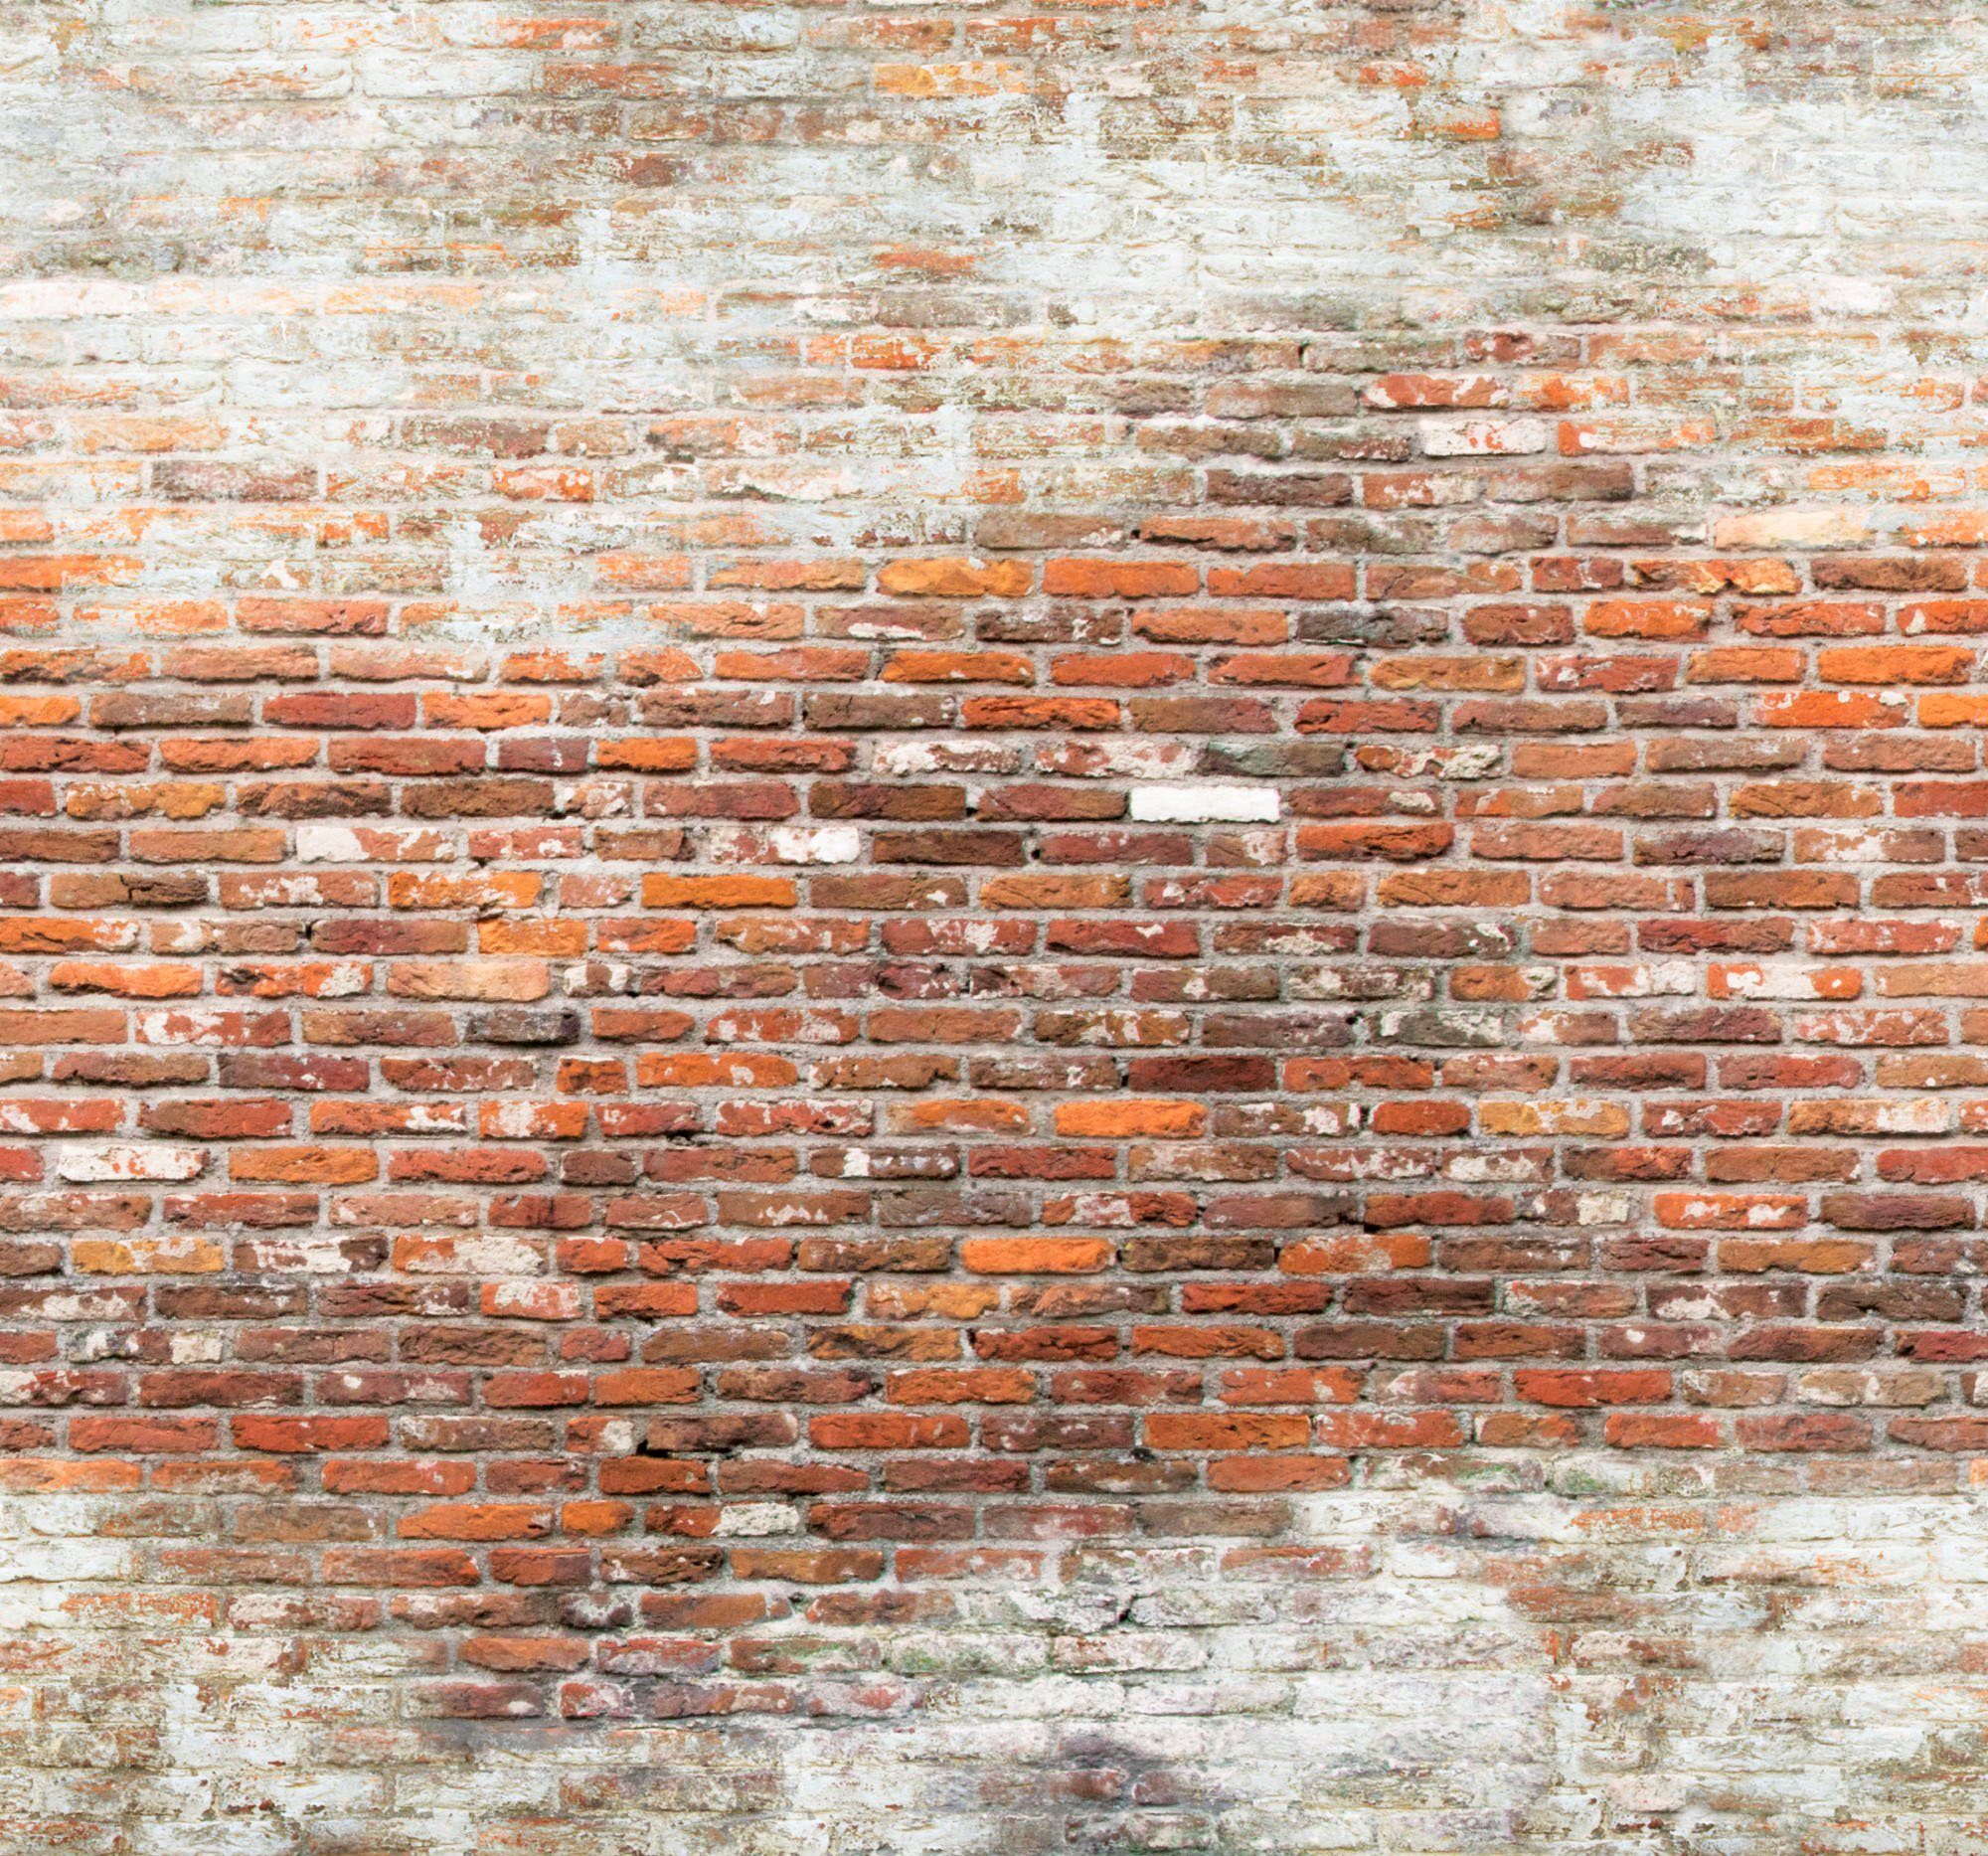 Art for the home Fototapete Brick wall 2, 300 cm Länge | Fototapeten